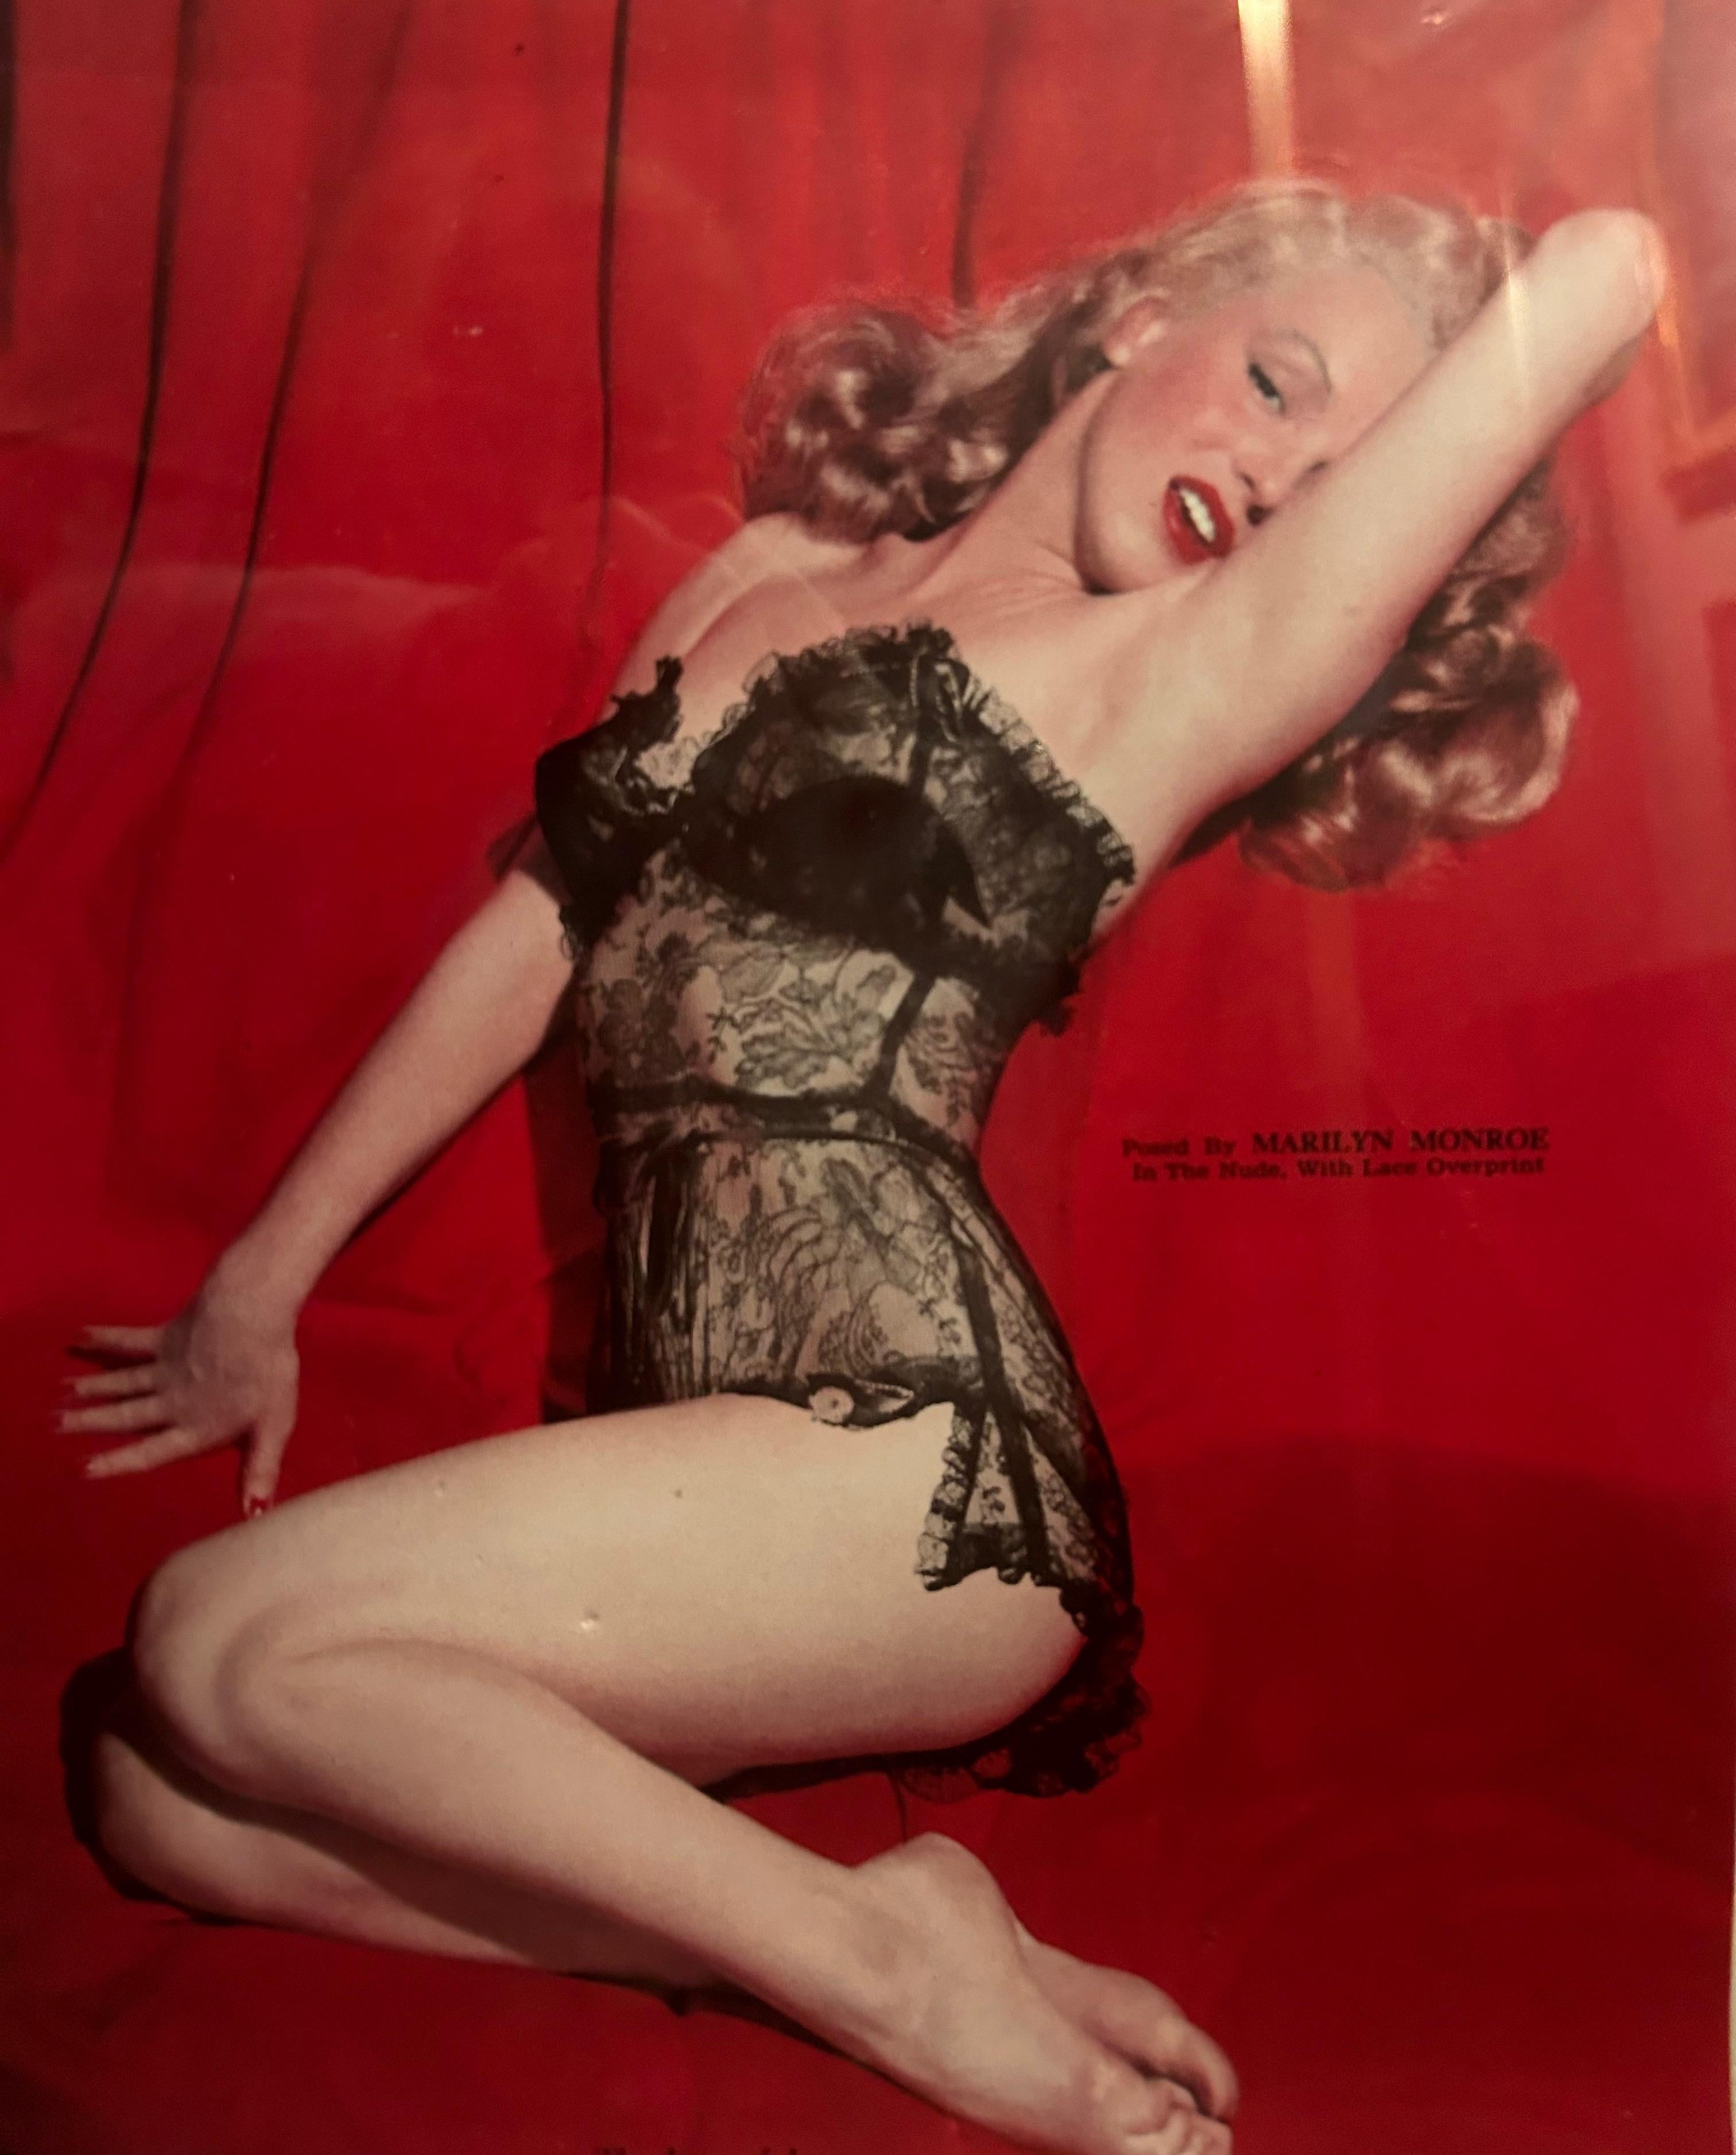 American Marilyn Monroe 1954 Calendar For Sale